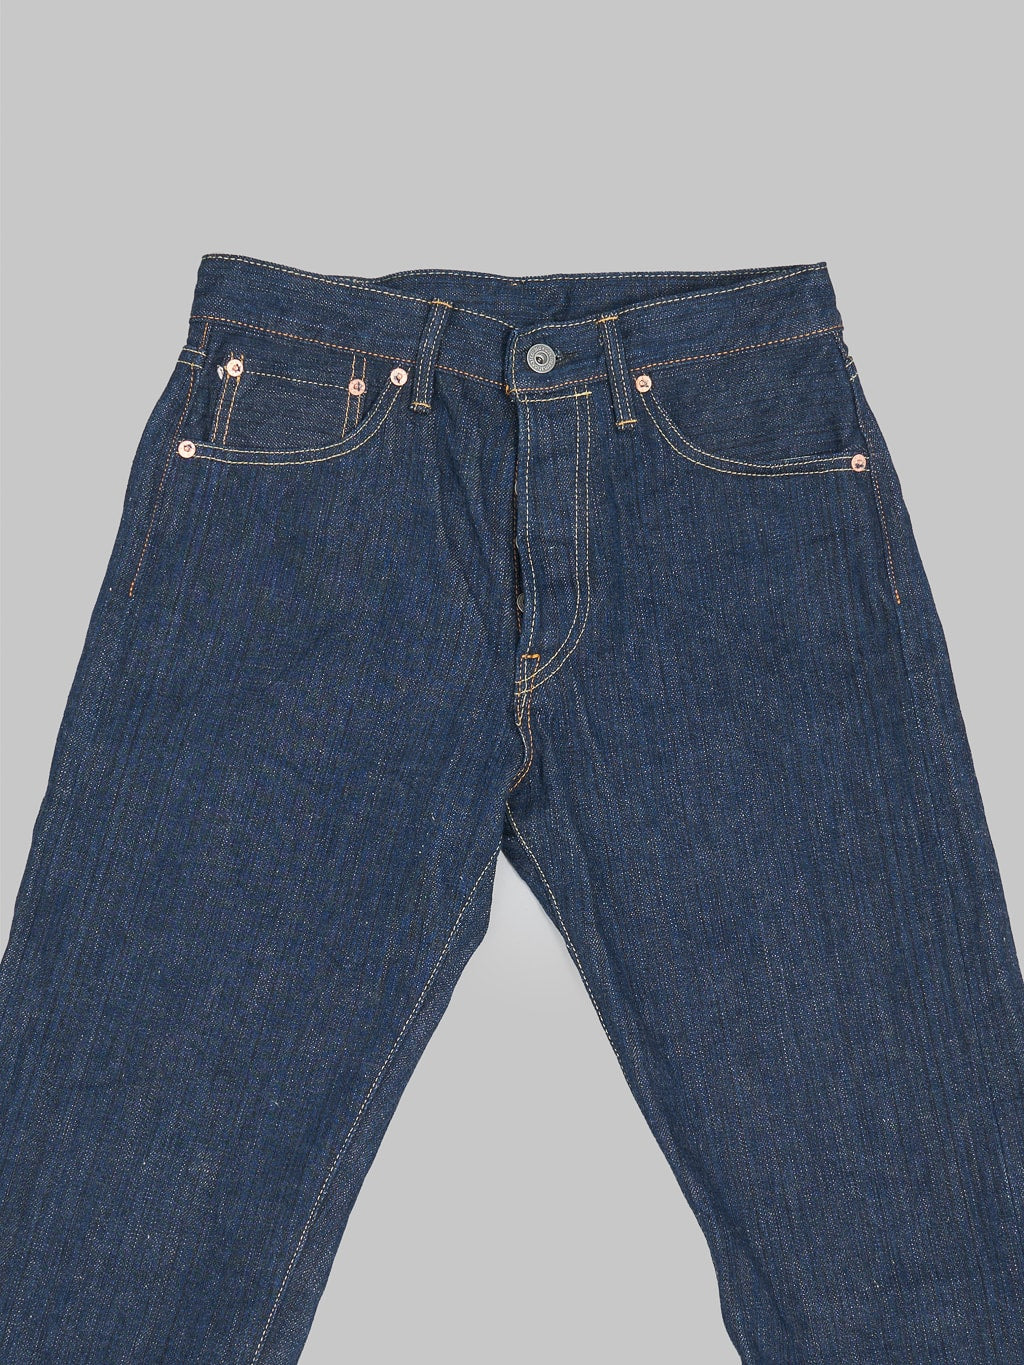 Oni denim kiwami indigo regular selvedge jeans front view details